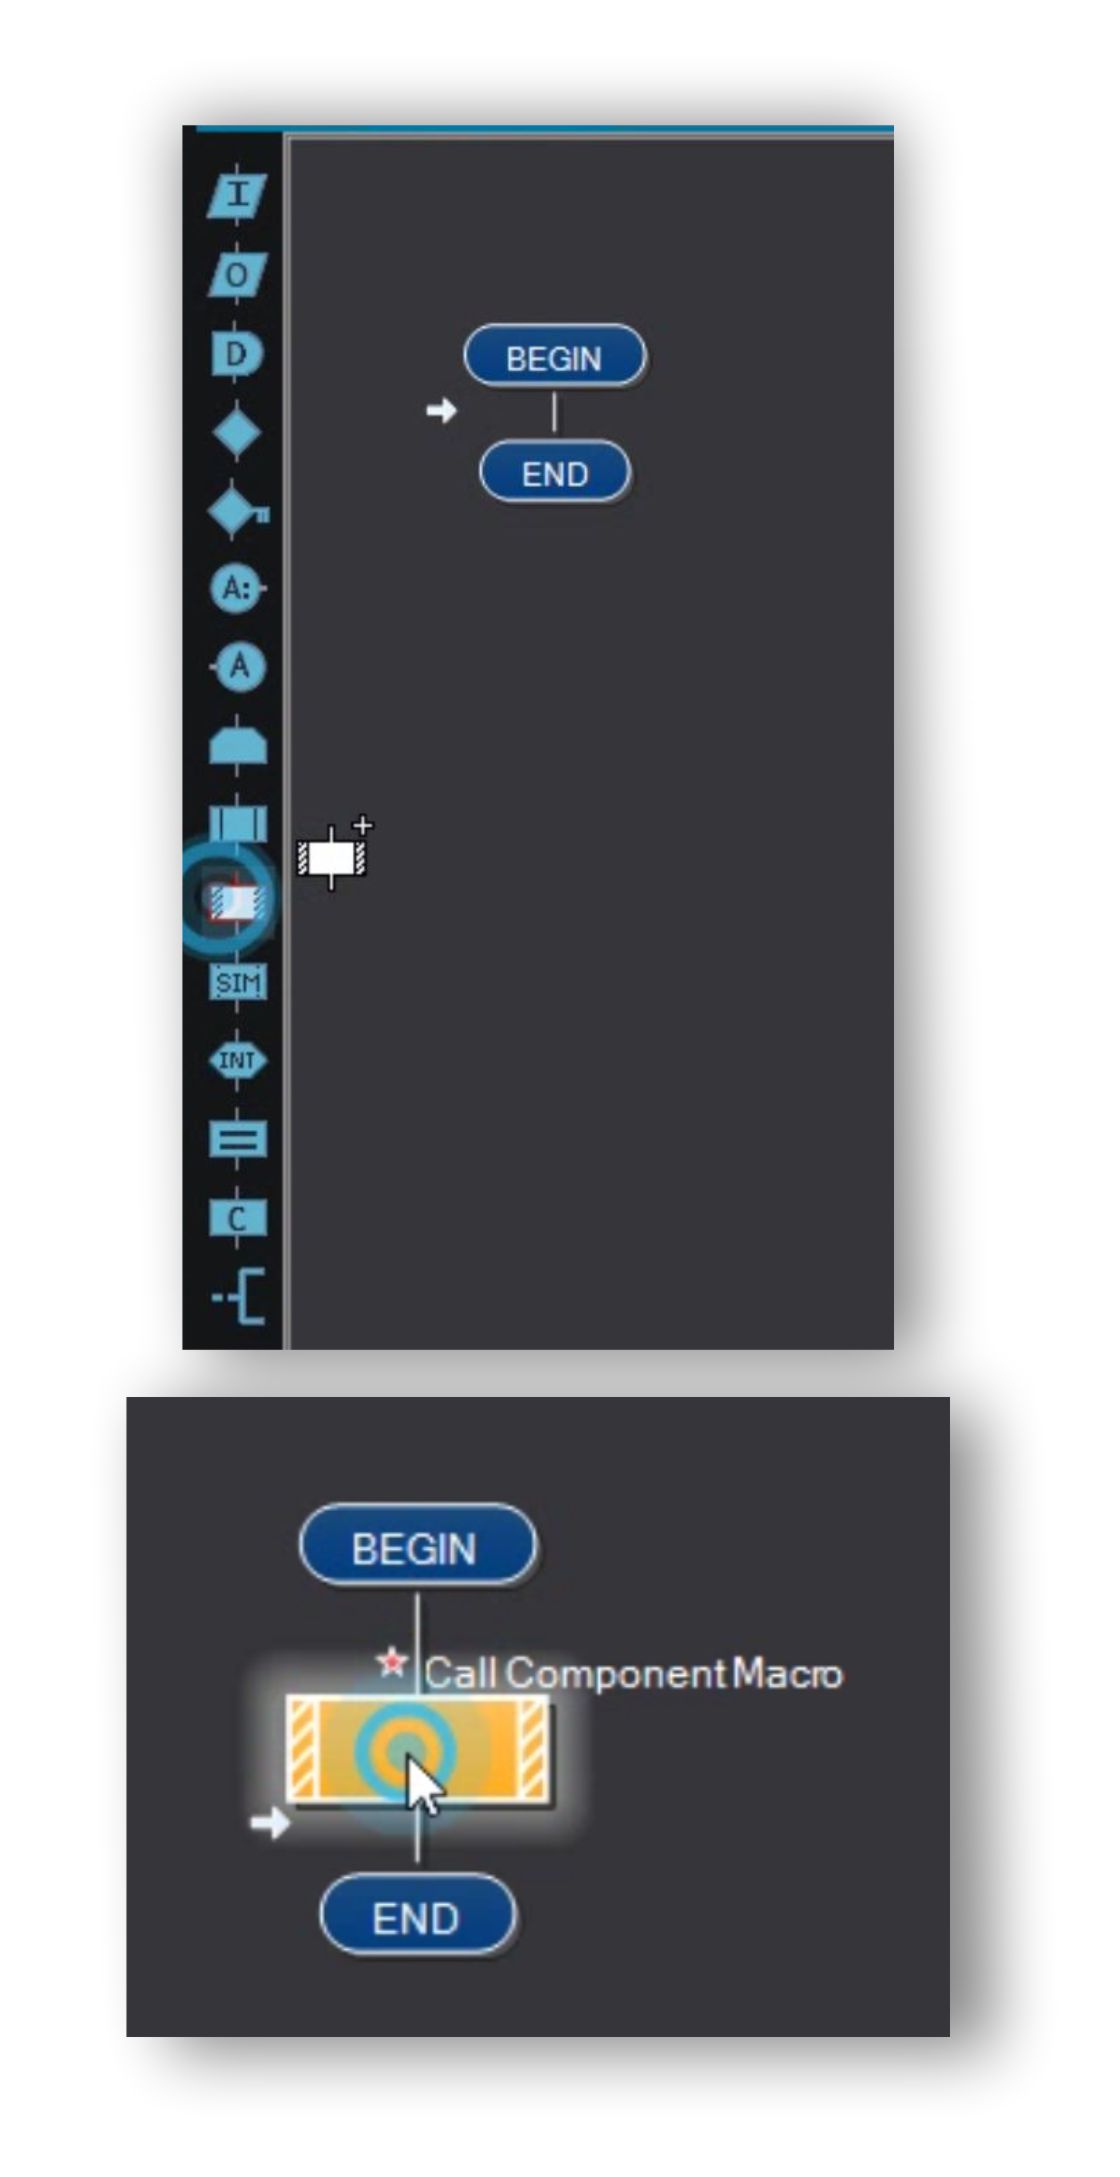 base LCD MACRO COMPONENT